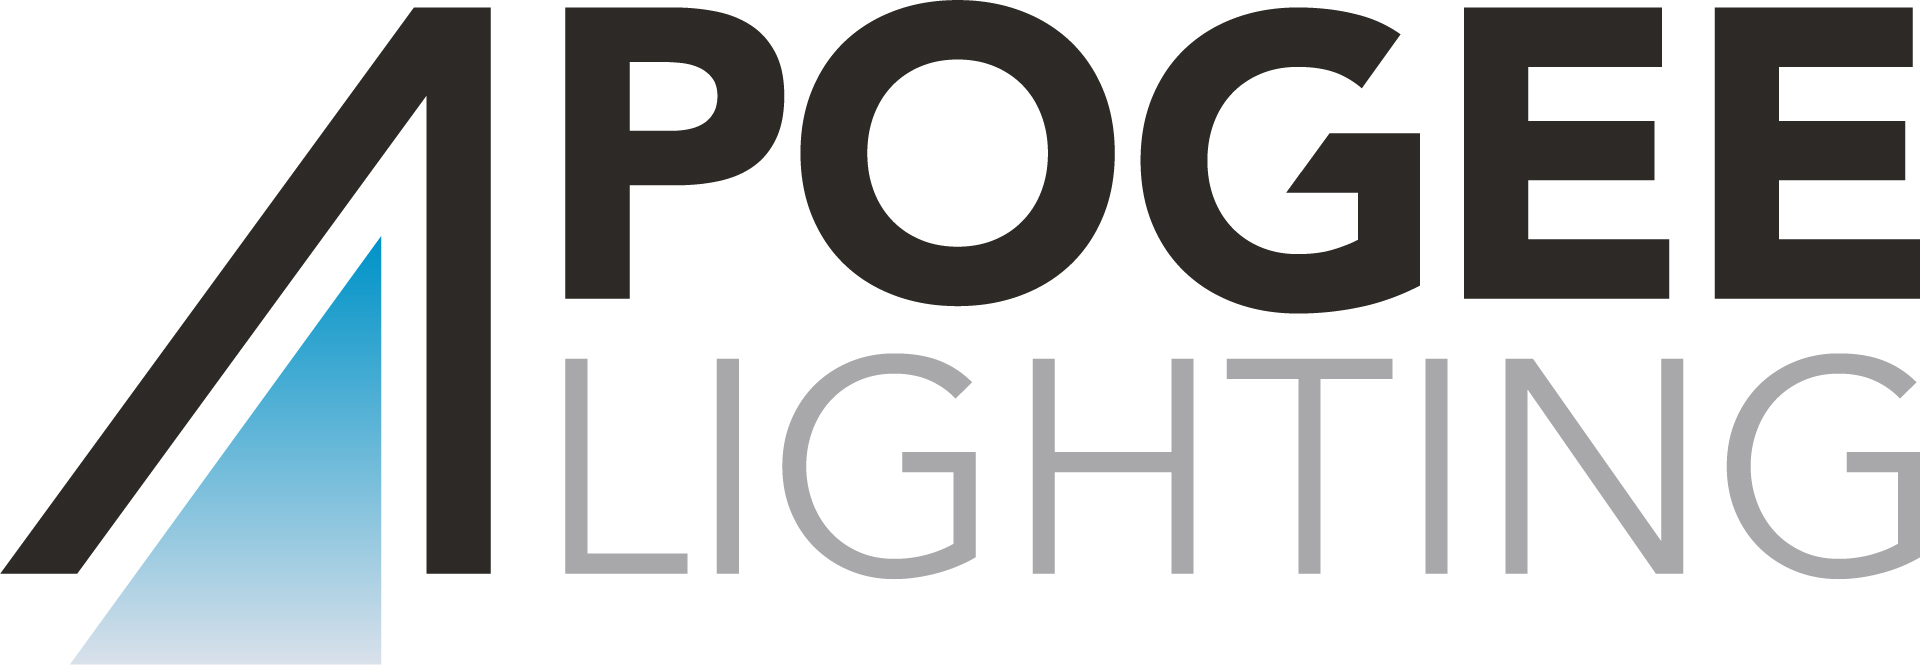 Apogee Lighting Holdings LLC